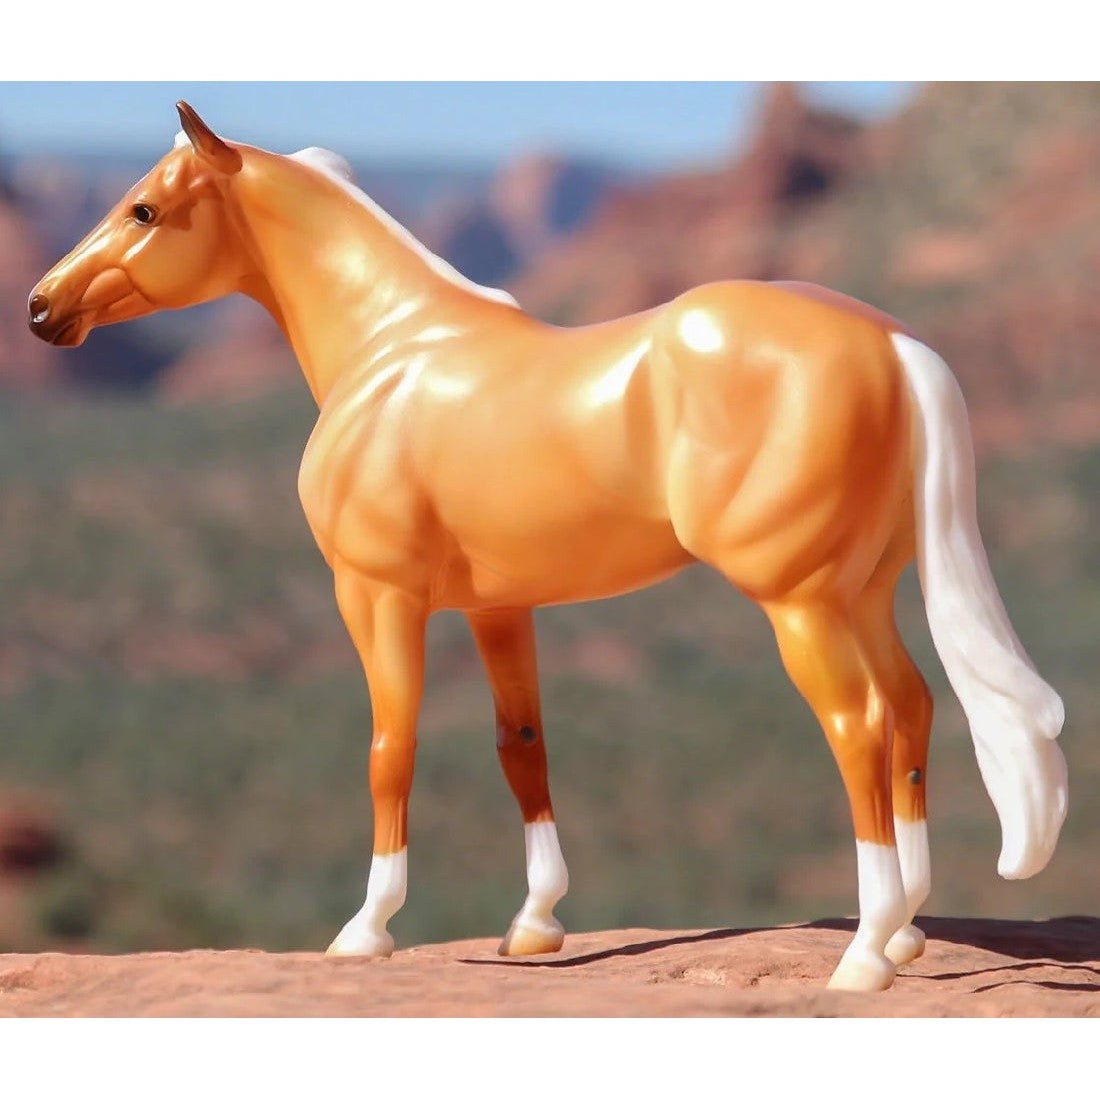 Anna Scarpati model horse figurine against a blurred desert backdrop.